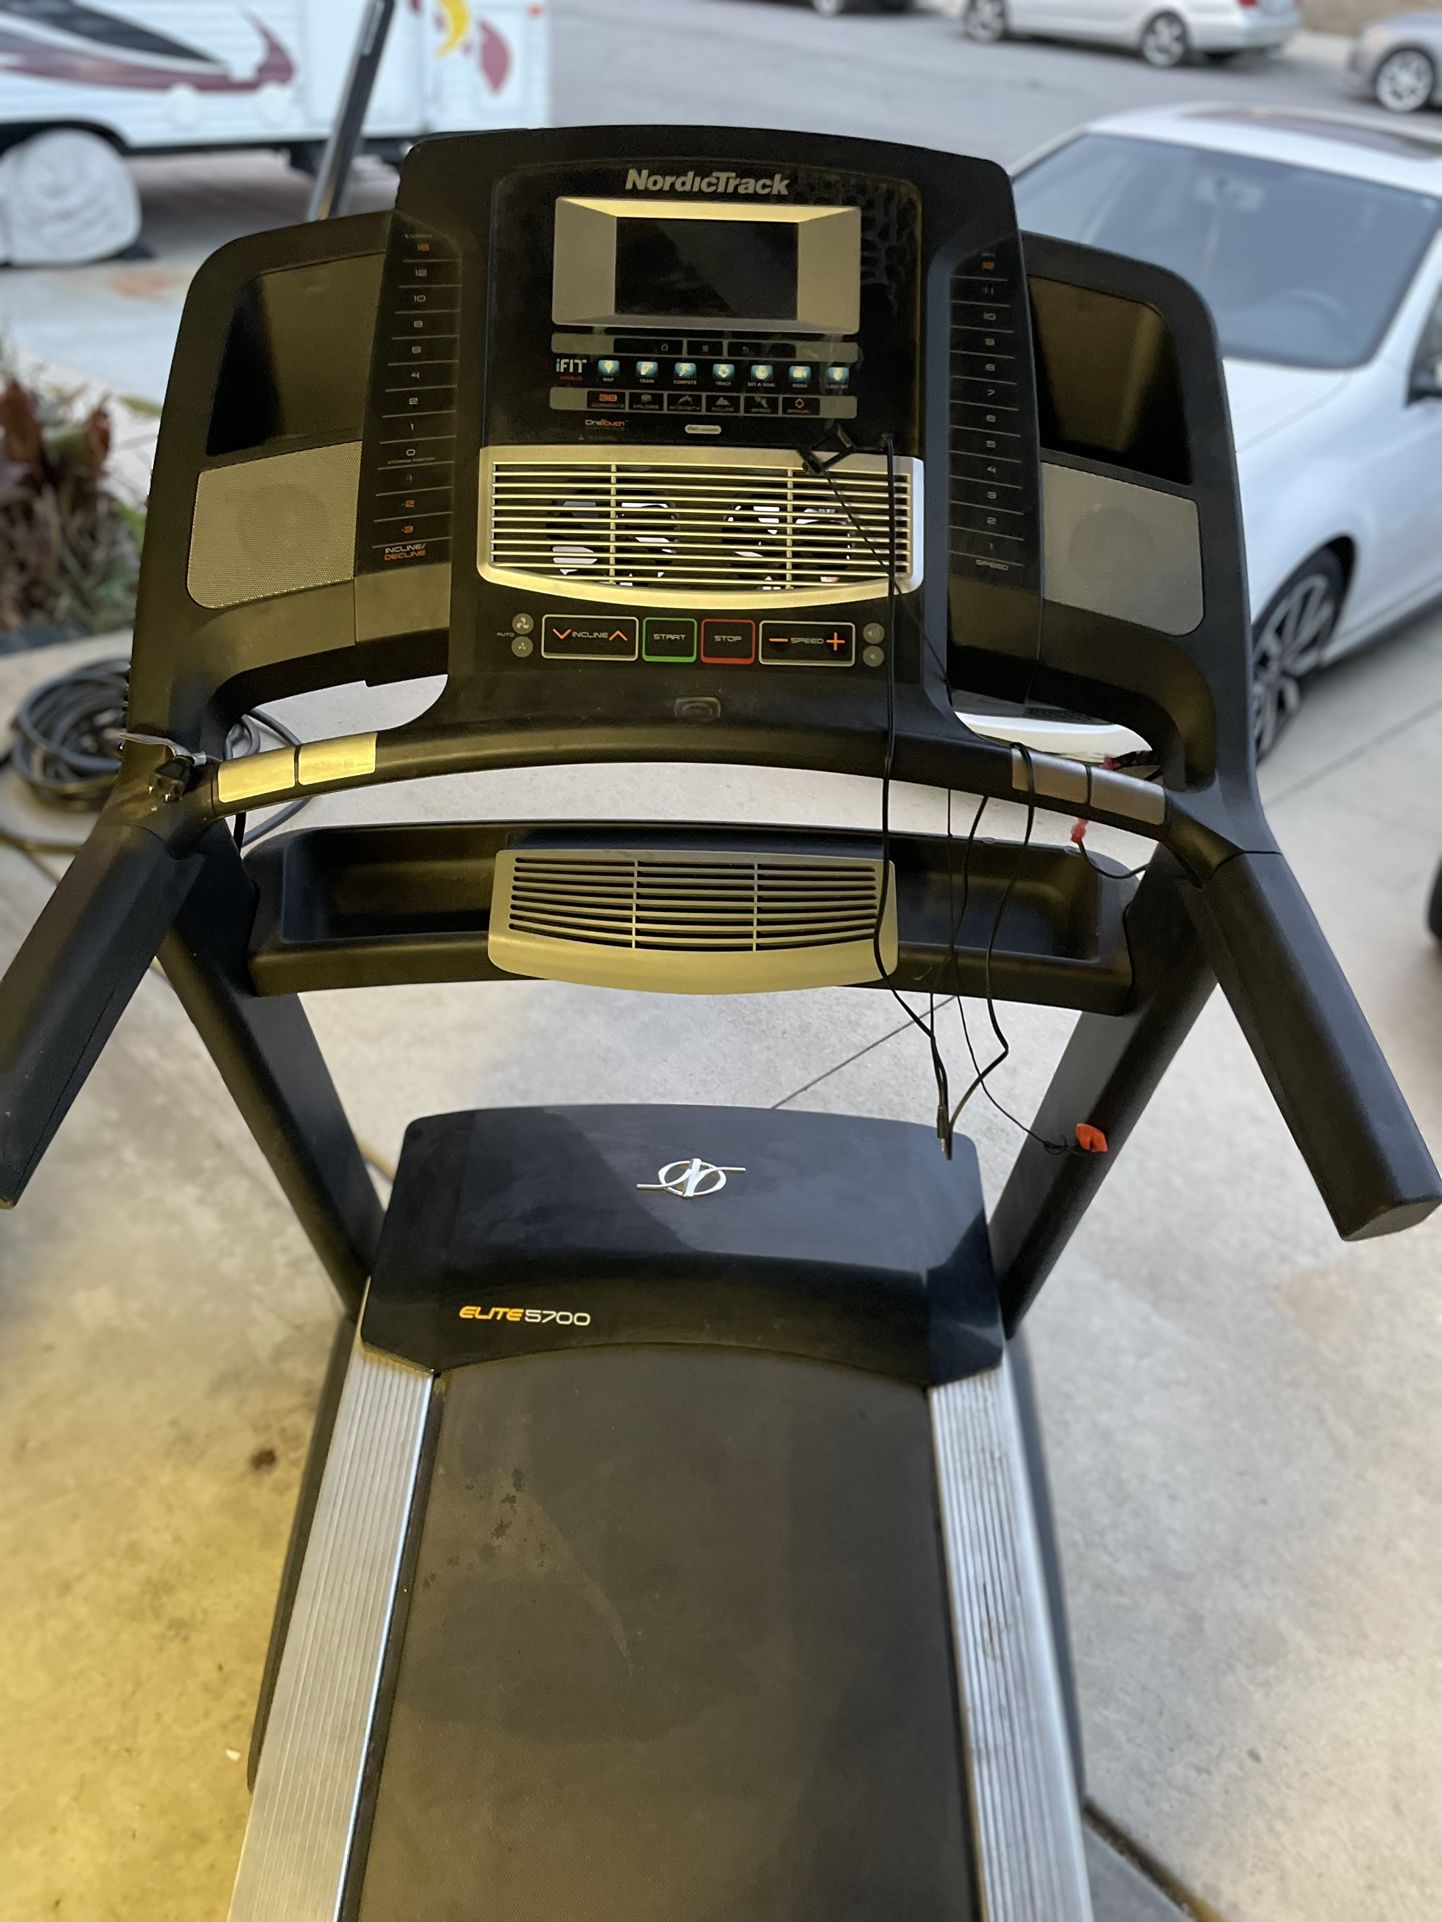 Foldable NordicTrack Elite 5700 Treadmill